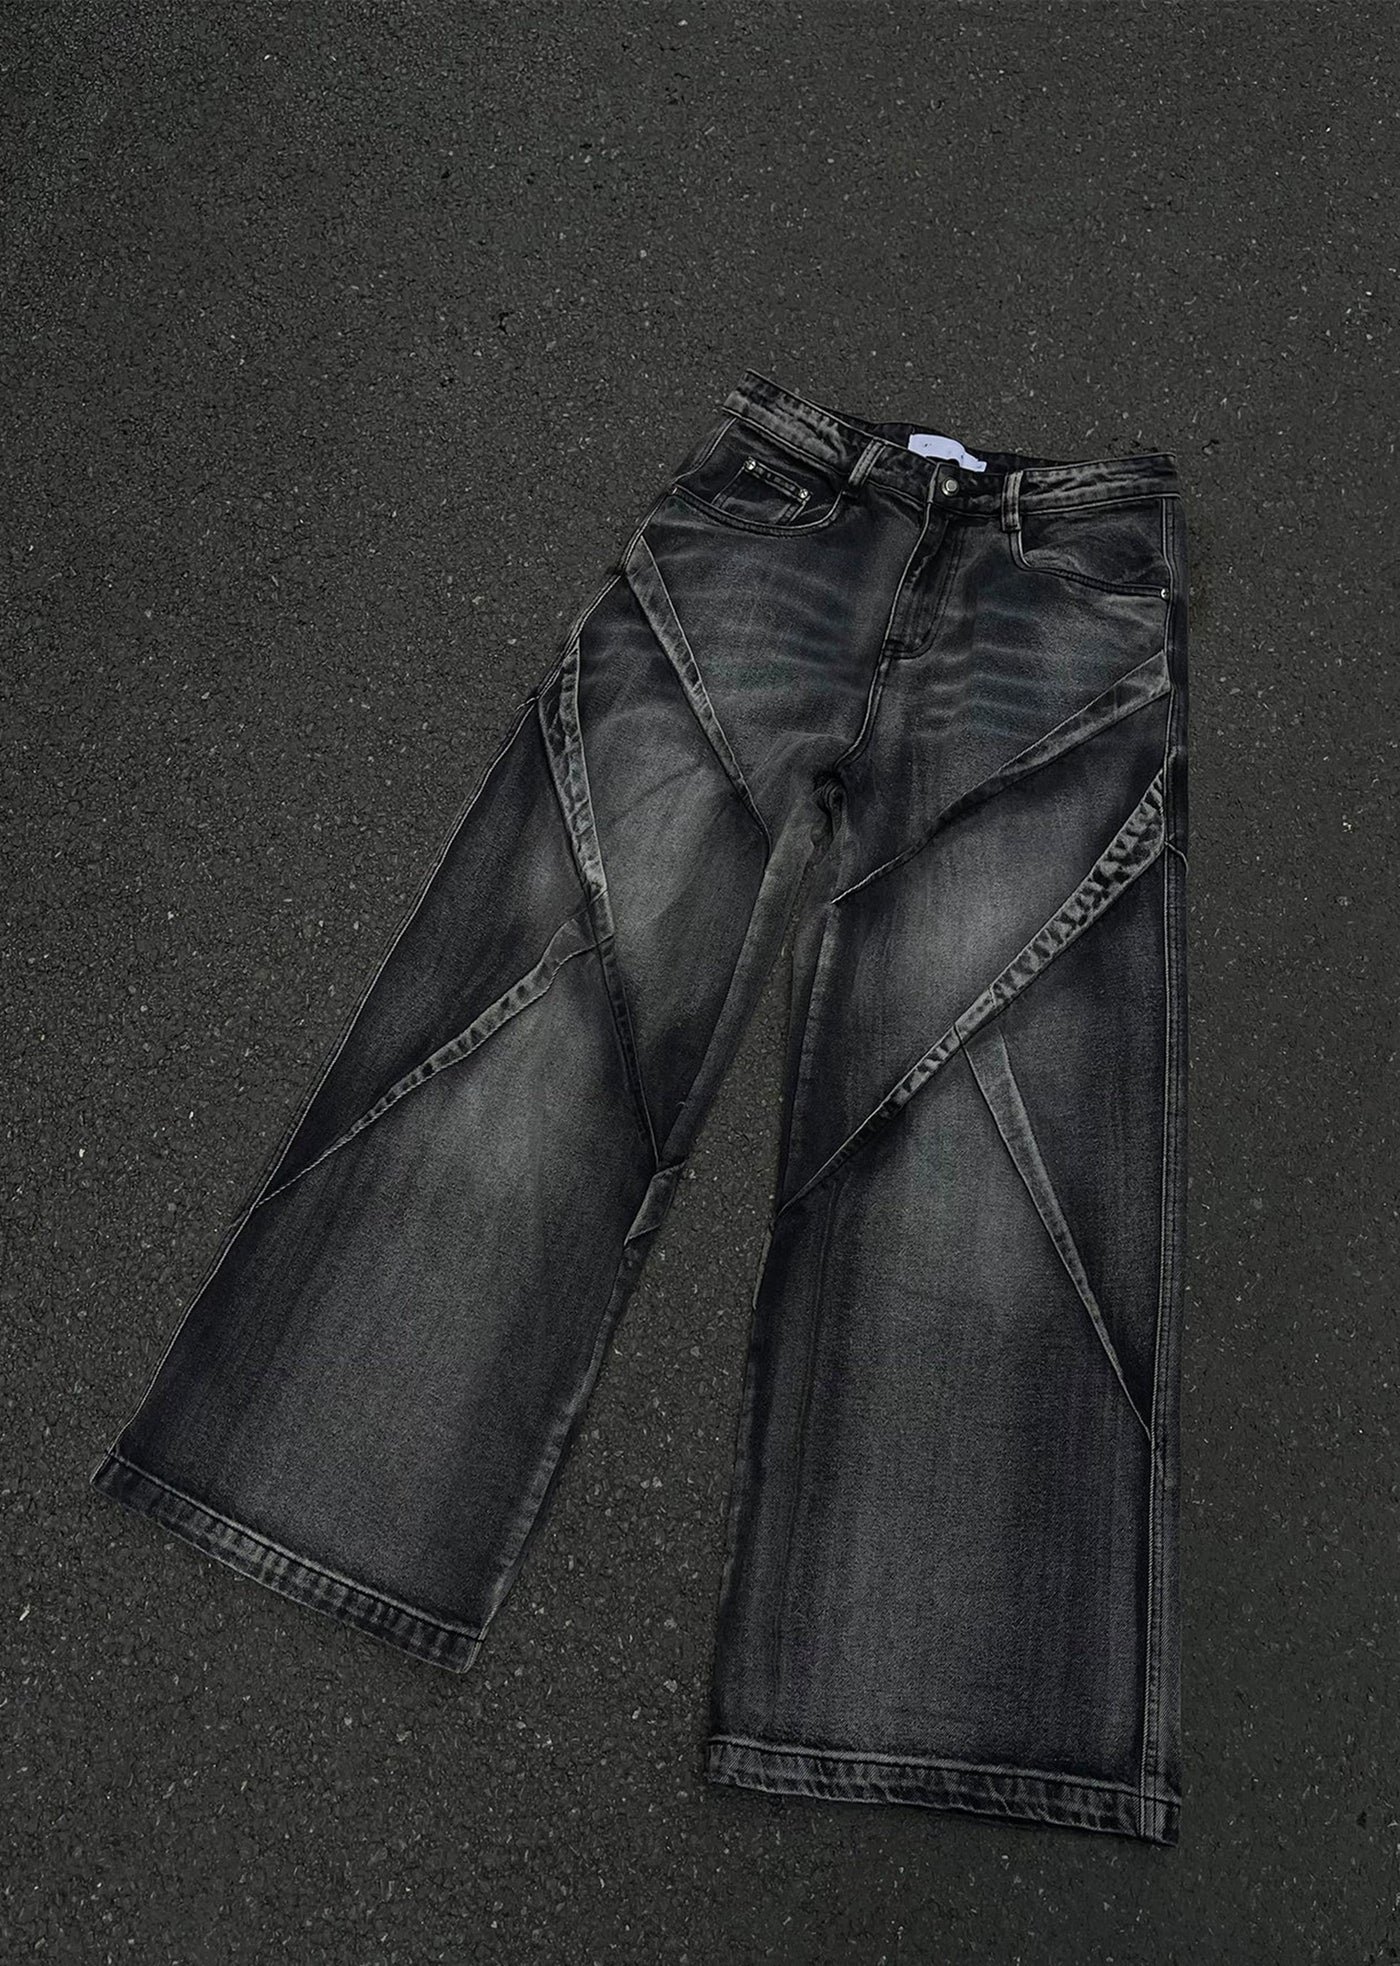 【MAXDSTR】Cross bike over wide silhouette black denim pants  MD0143